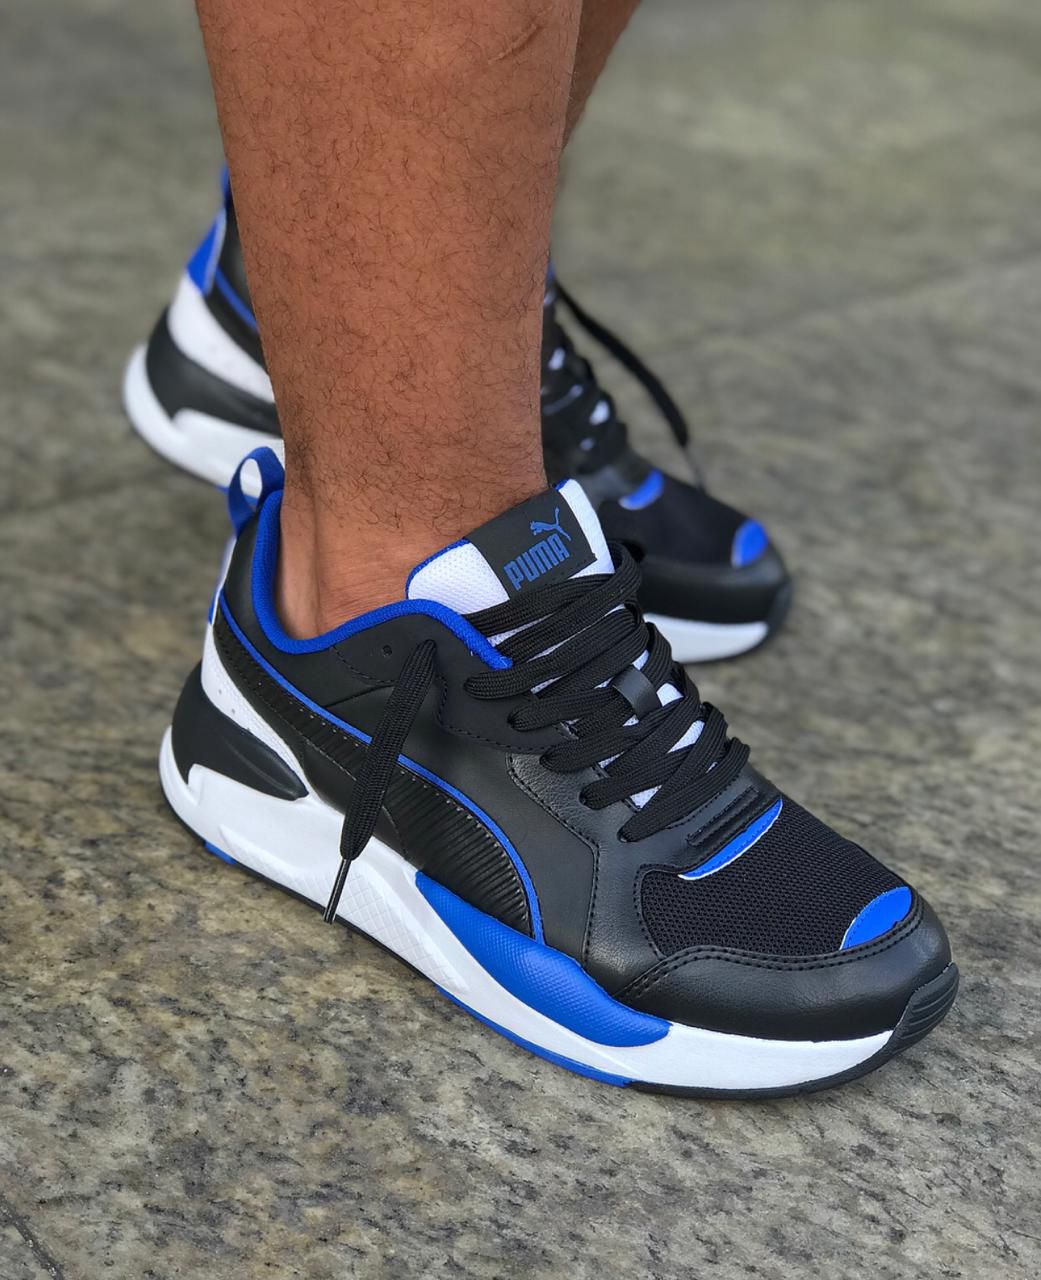 Tenis Puma X Ray Game Preto com Azul - Lace Sneakers